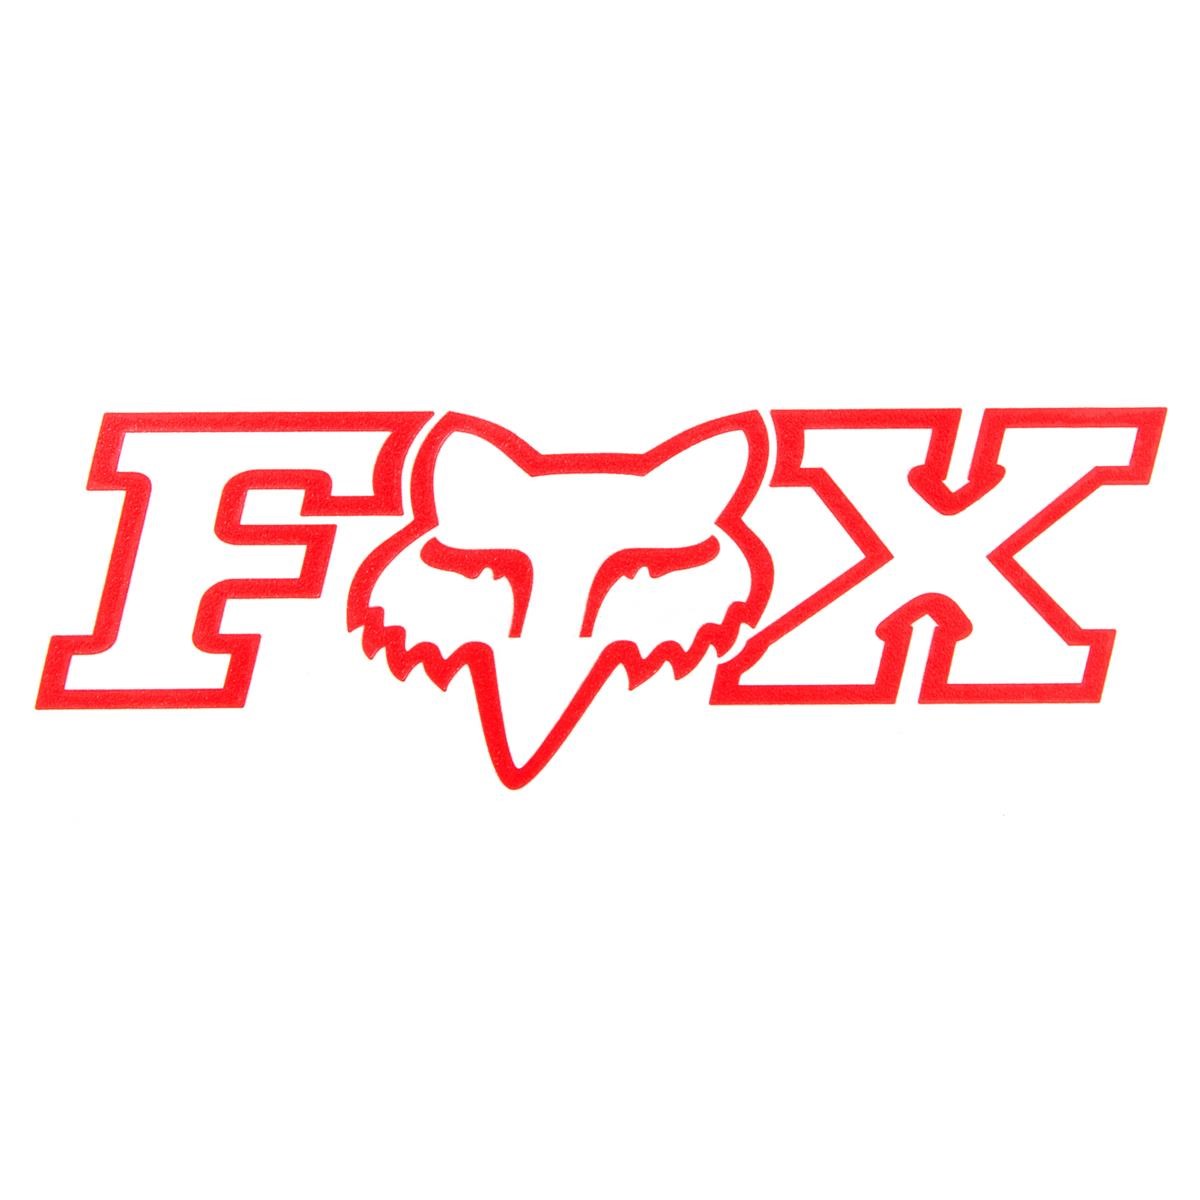 Fox Sticker Corporate TDC Rot - 18 cm